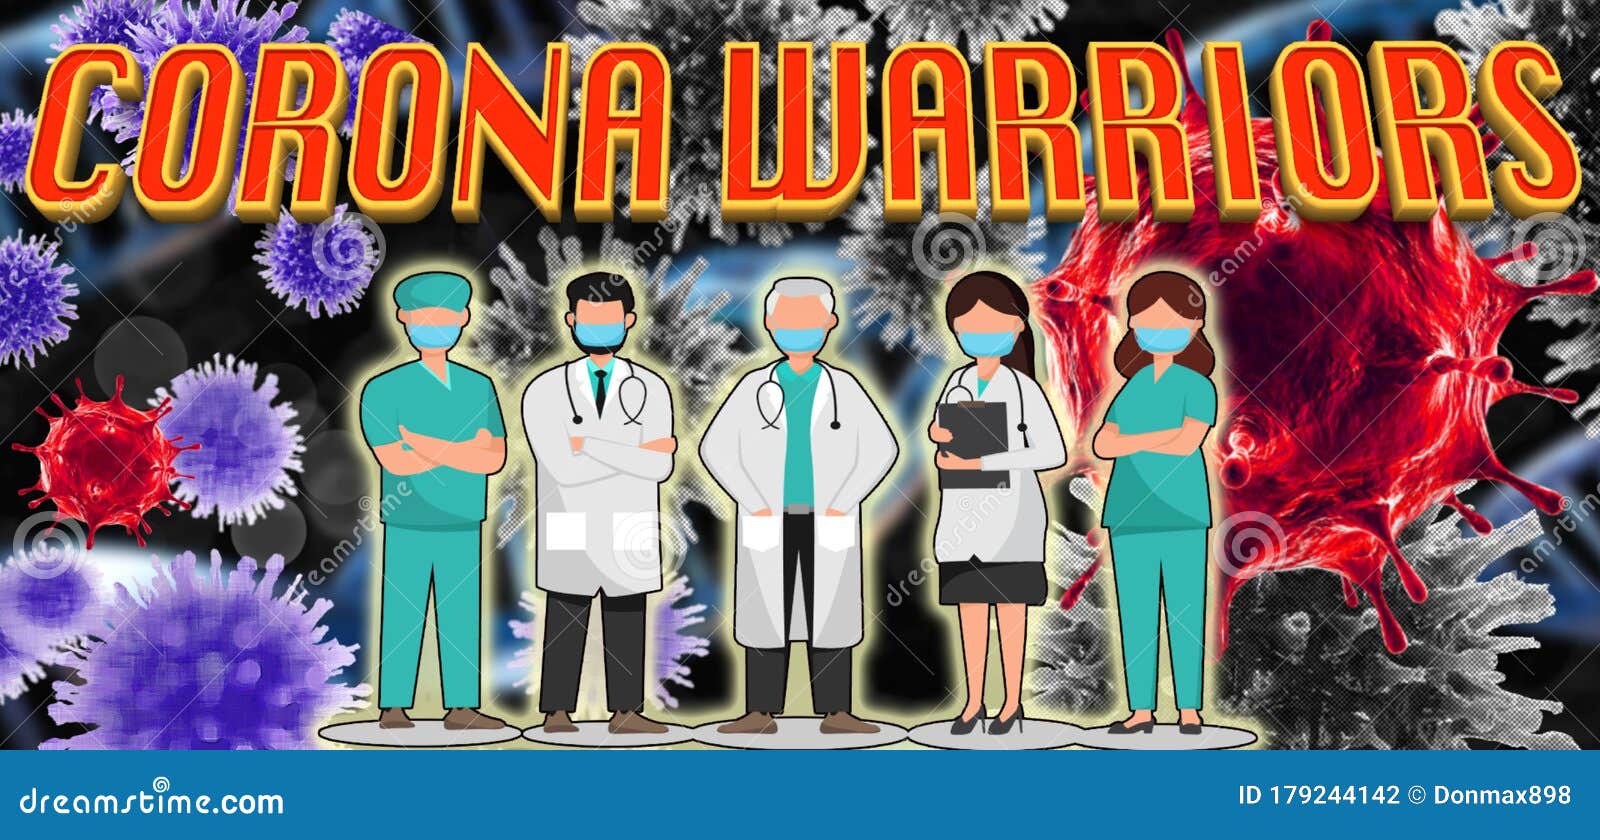 Corona Warriors Doctors And Health Professionals Stock ...